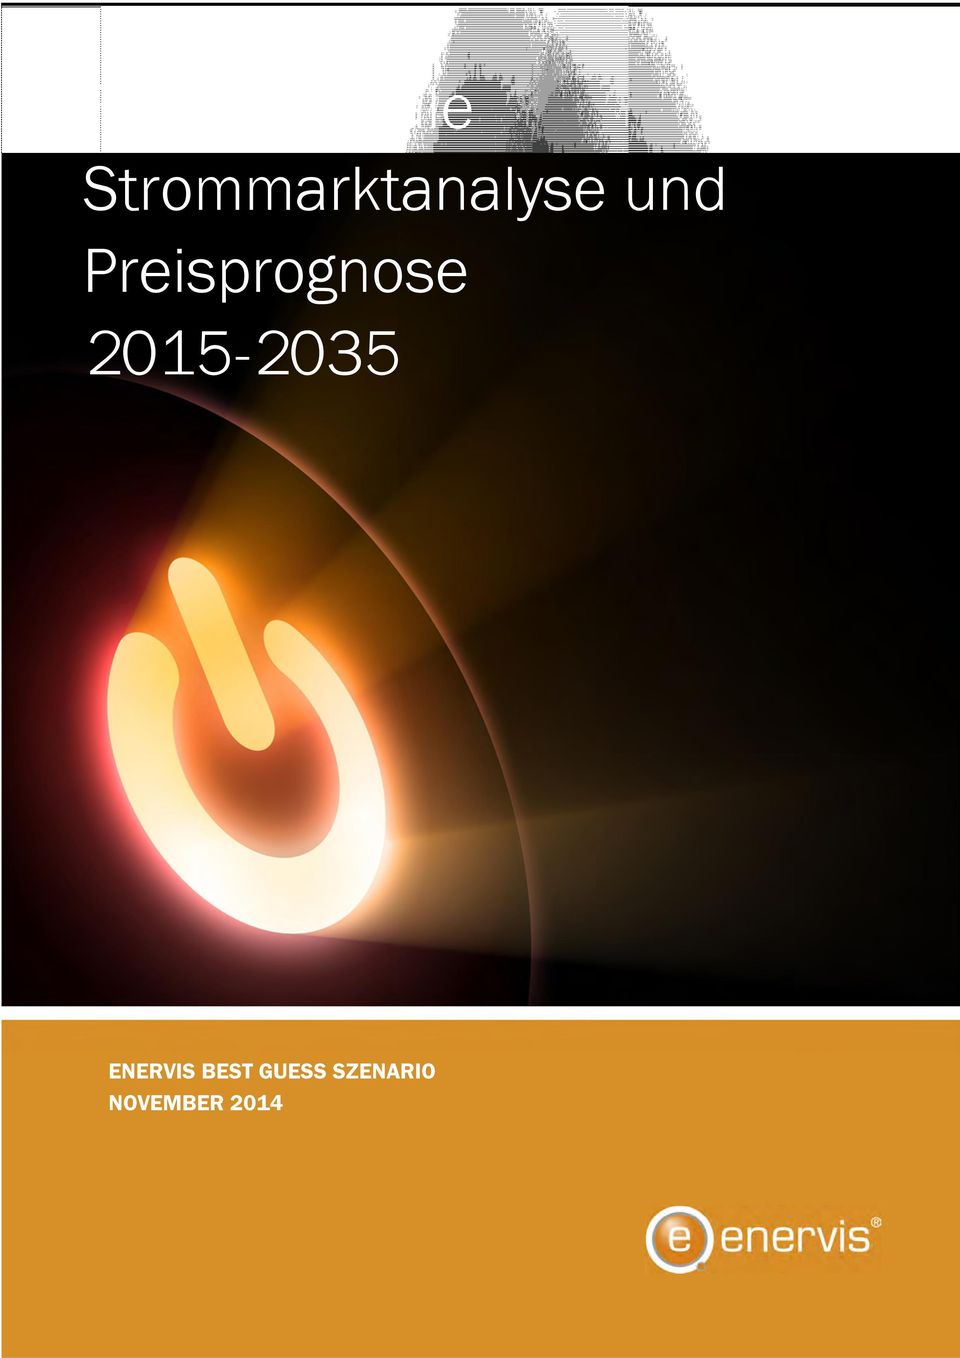 Preisprognose 2015-2035